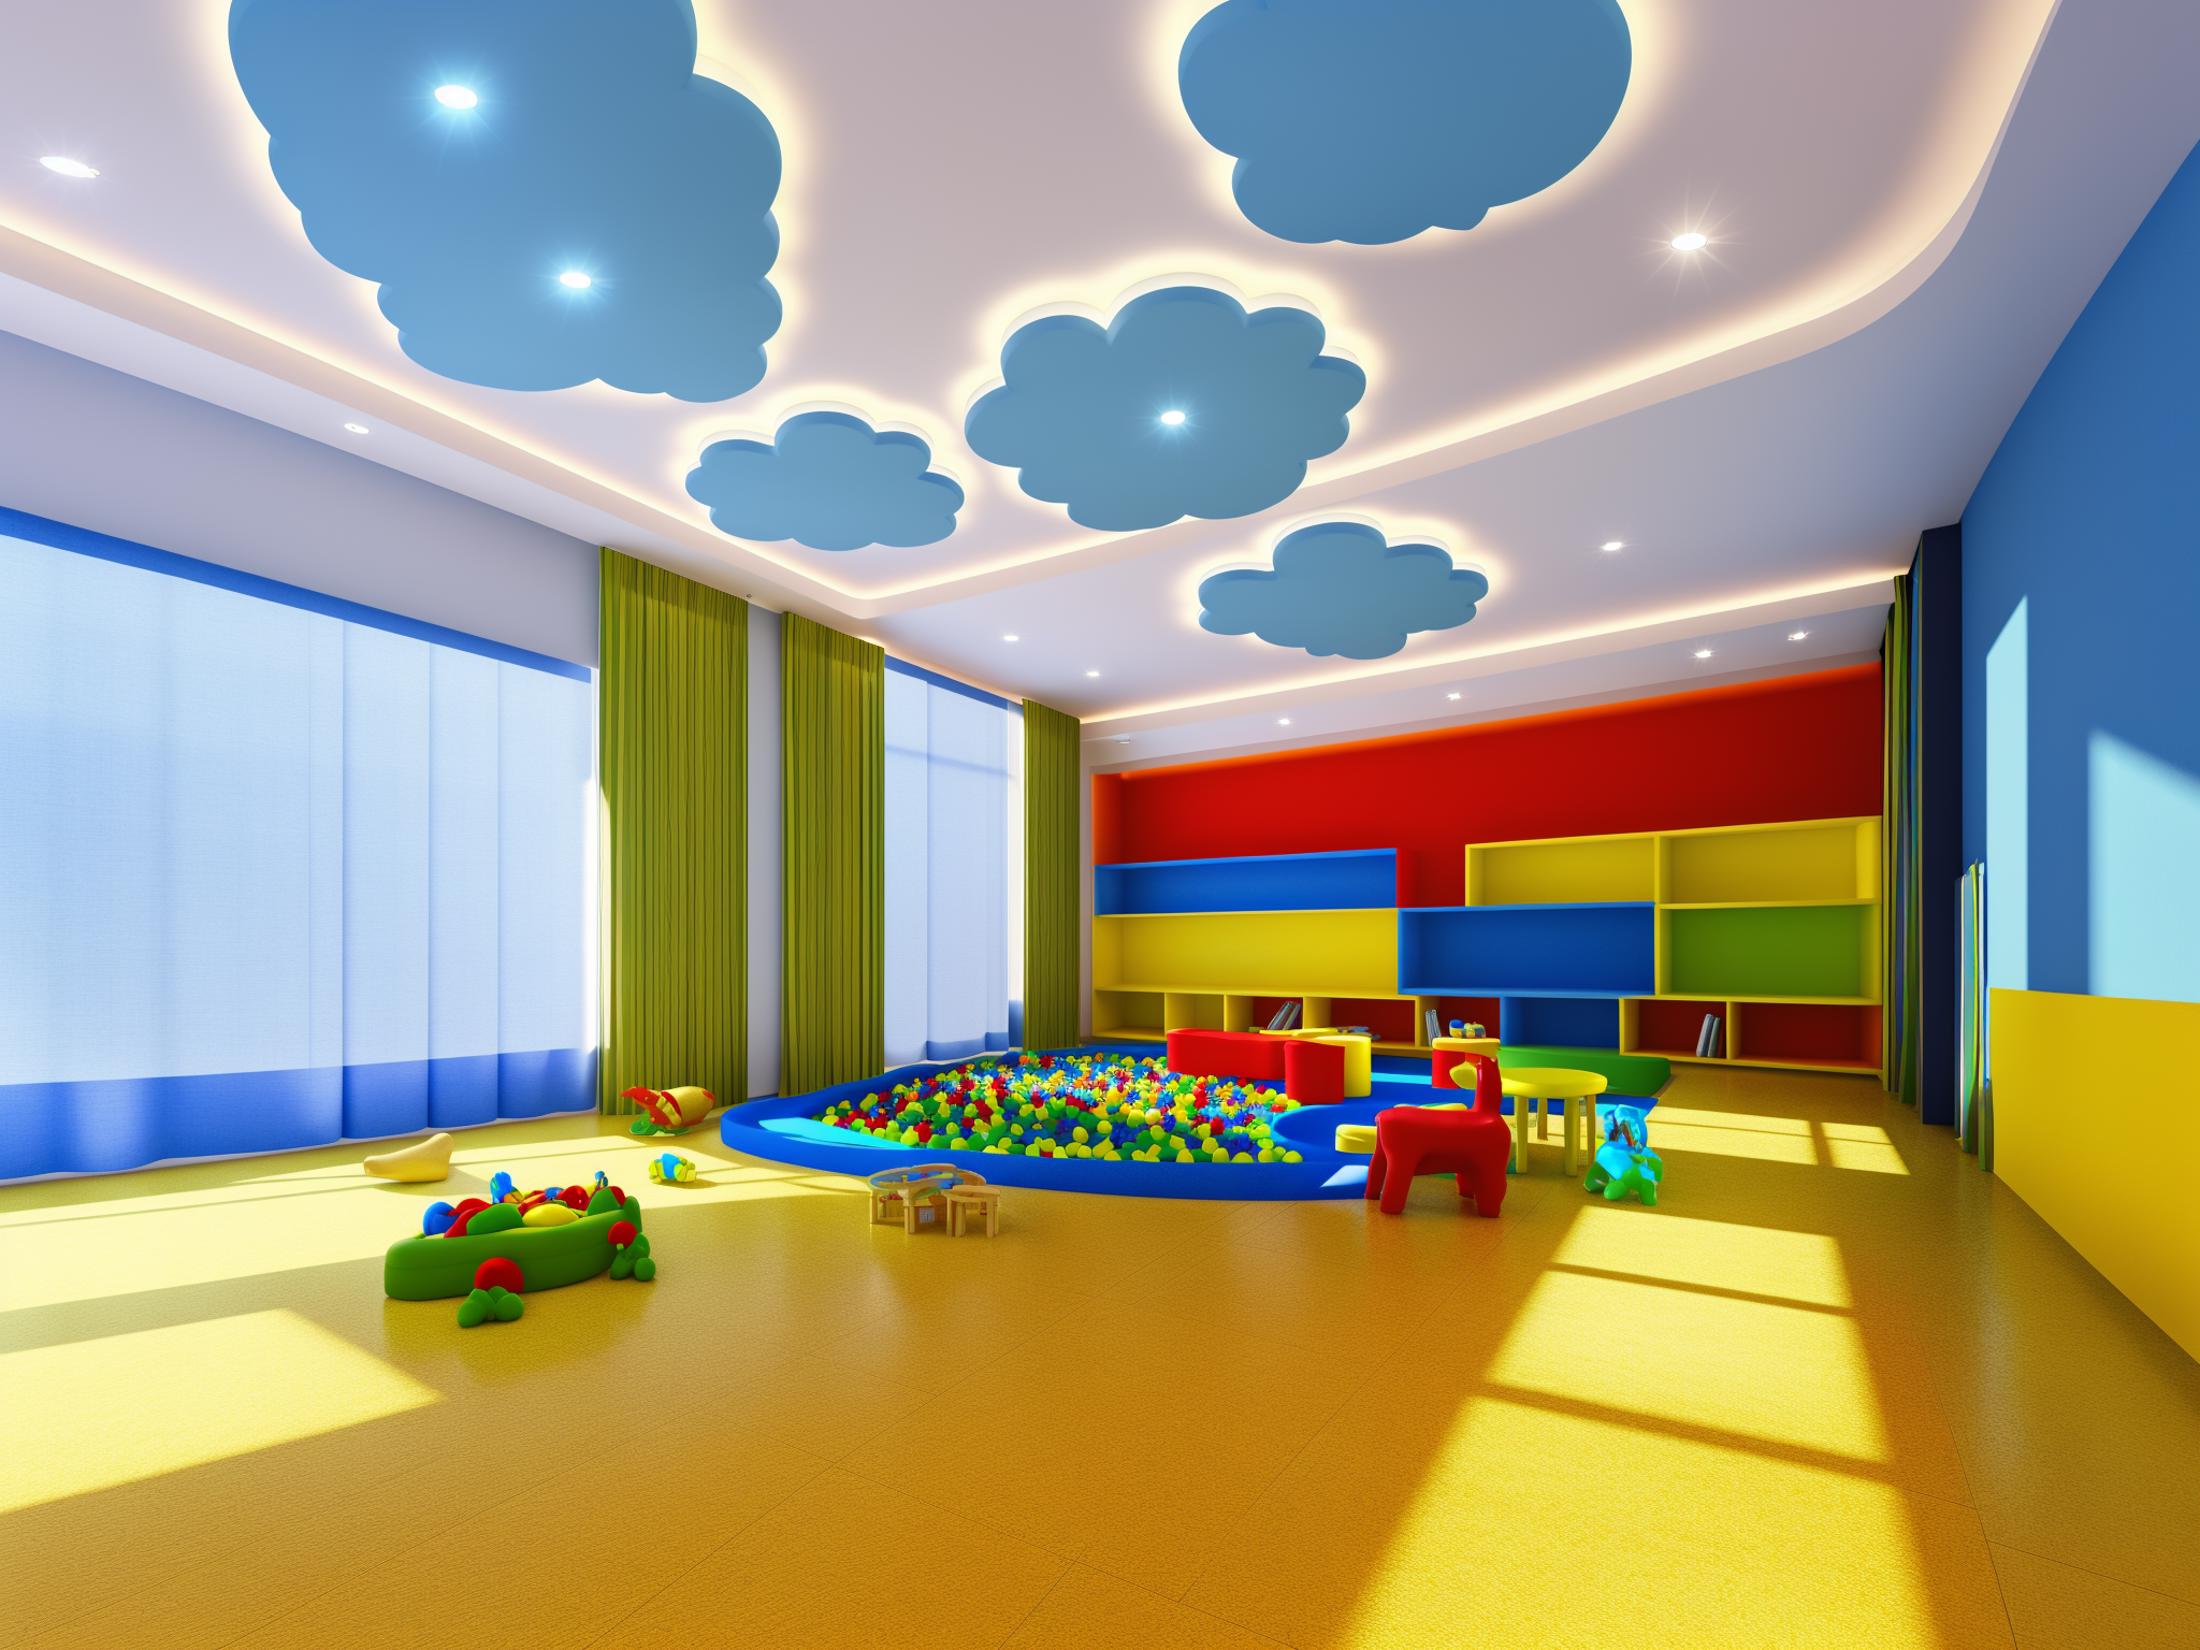 JJ's Interior Space - Playroom image by jjhuang